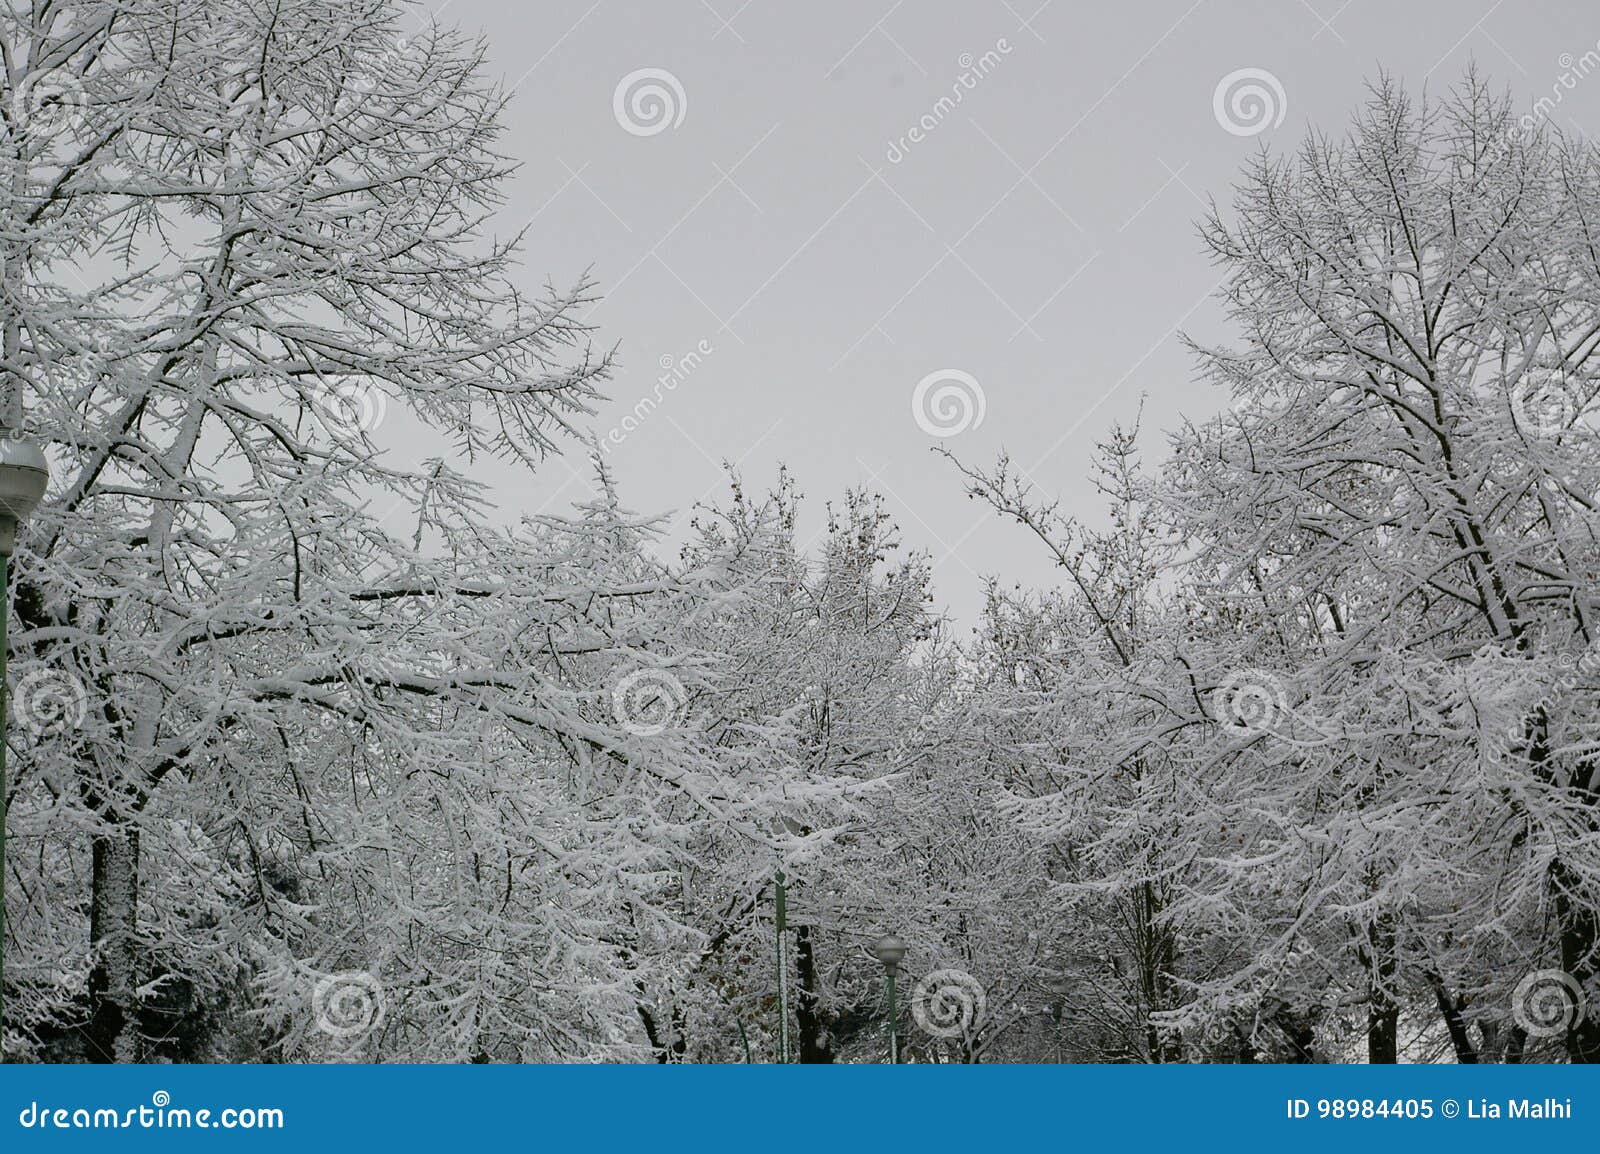 frozen treas ` a perfect winter city park trees image